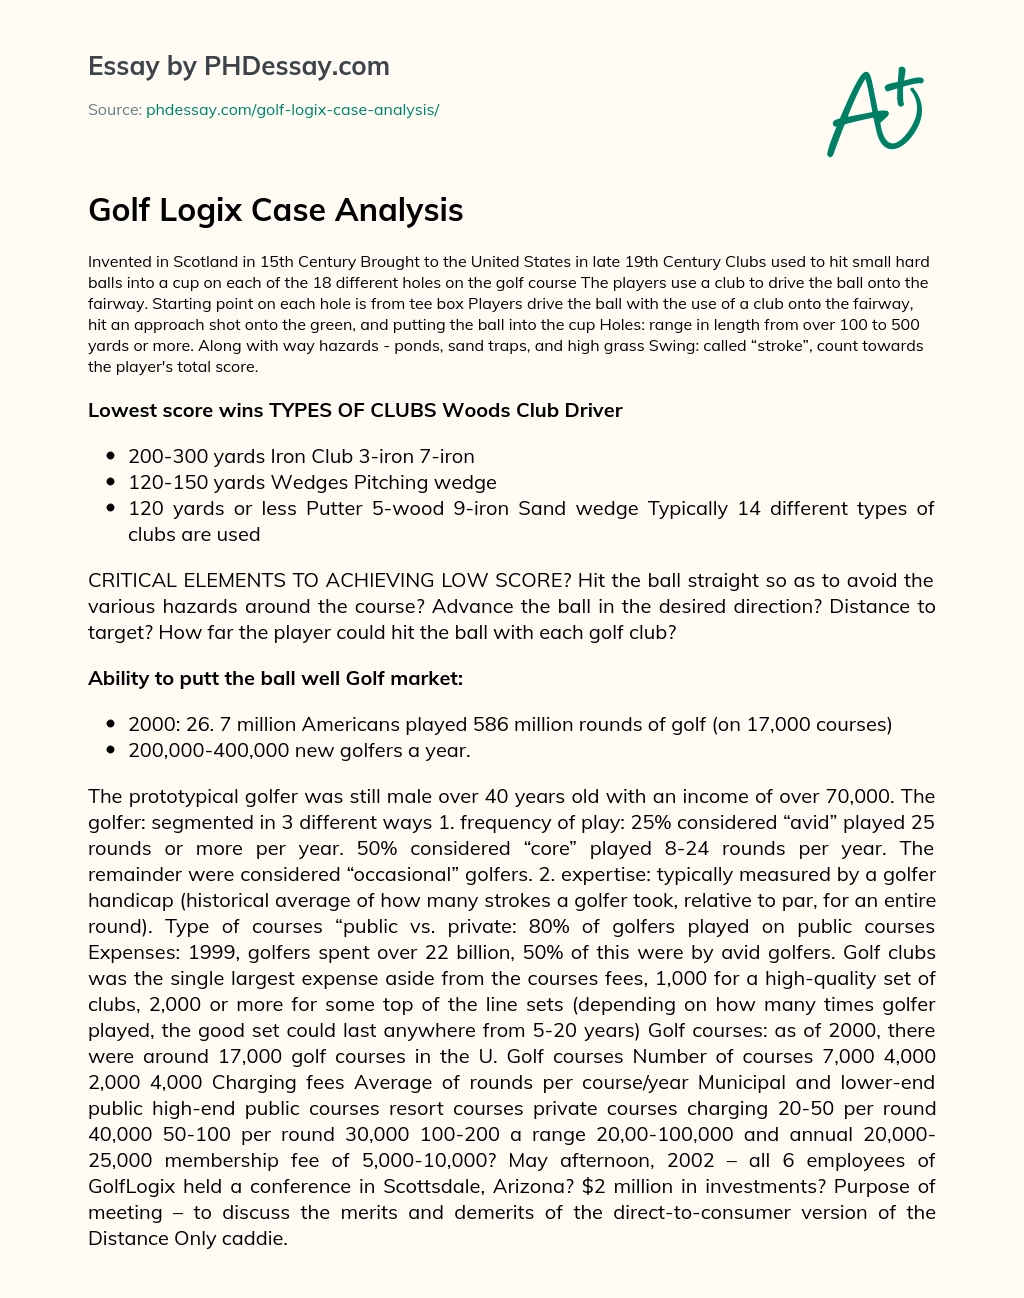 Golf Logix Case Analysis essay